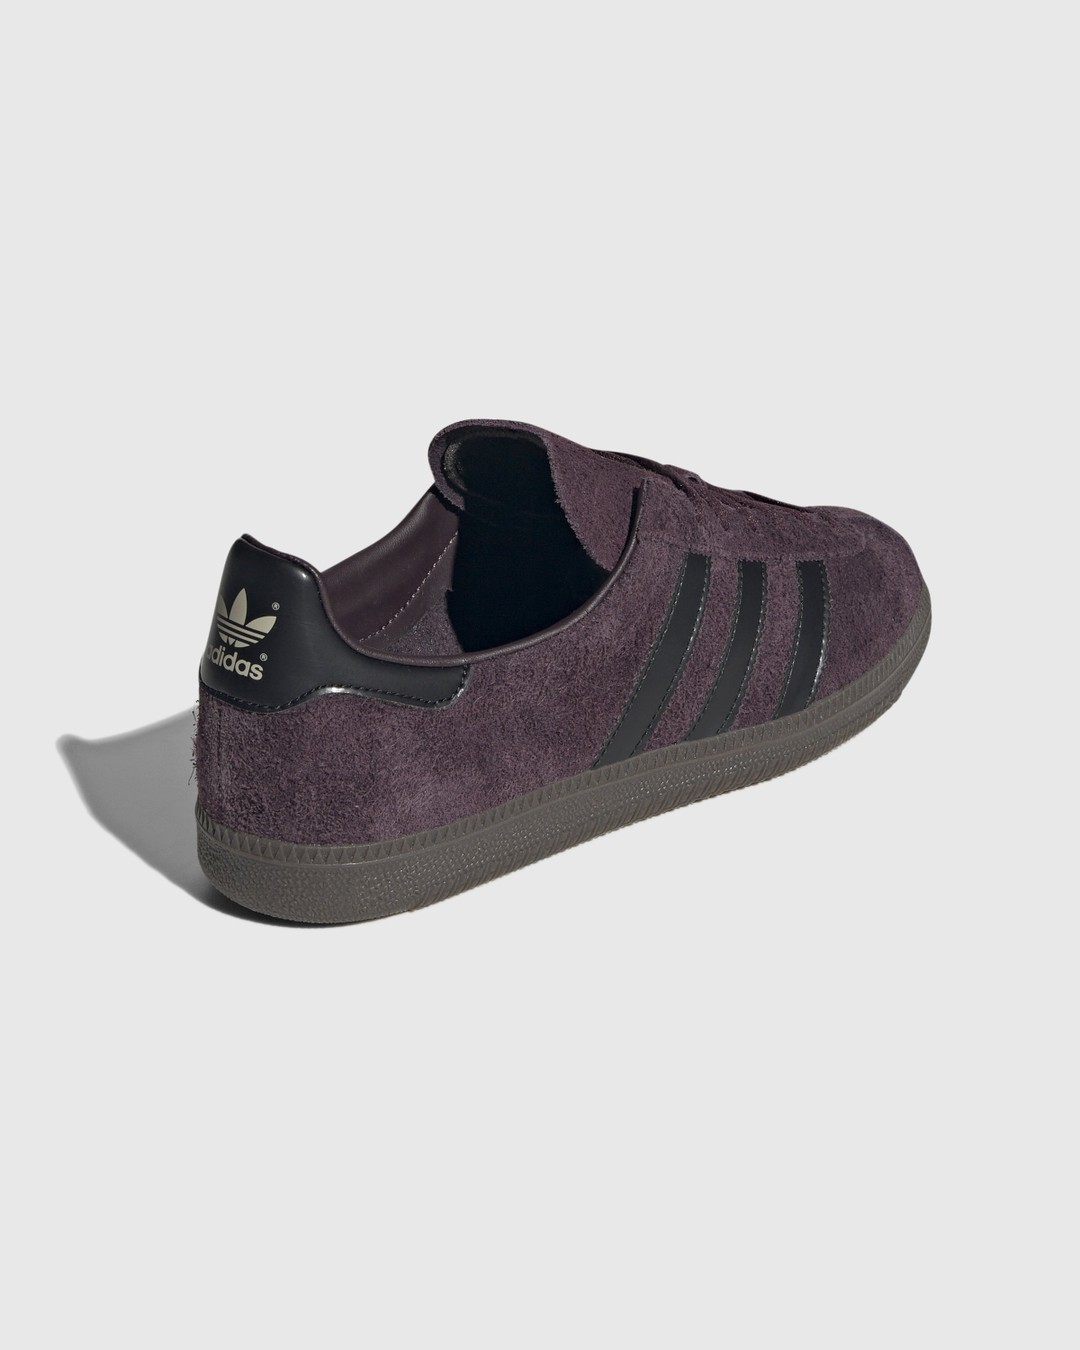 Adidas – State Brown - Sneakers - Brown - Image 4